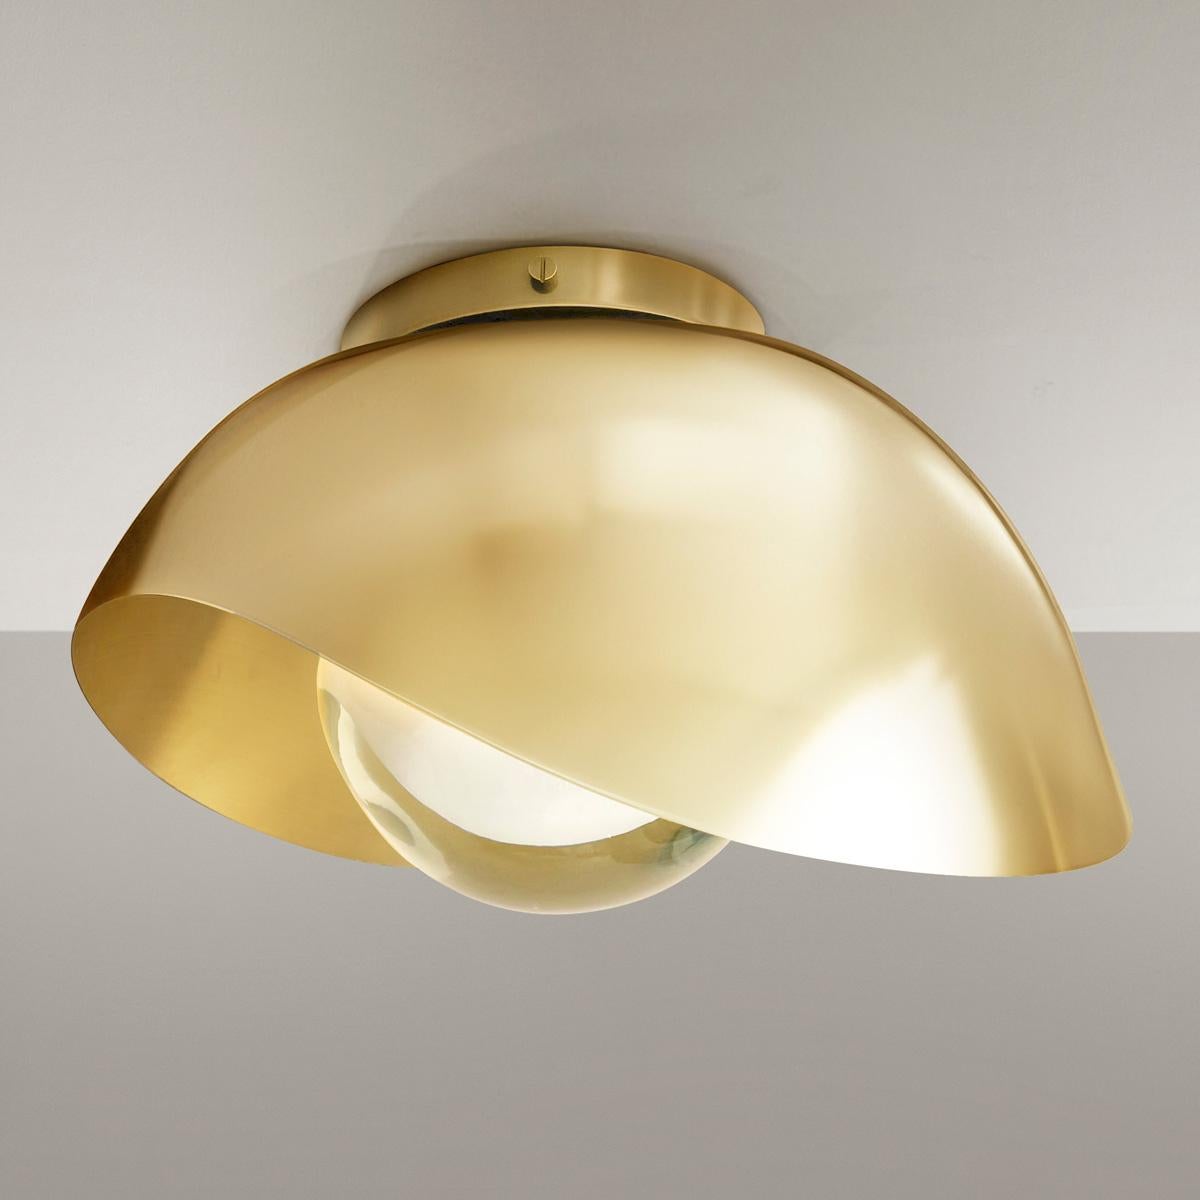 Organic Modern Perla Flushmount Ceiling Light by Gaspare Asaro-Brass Finish For Sale